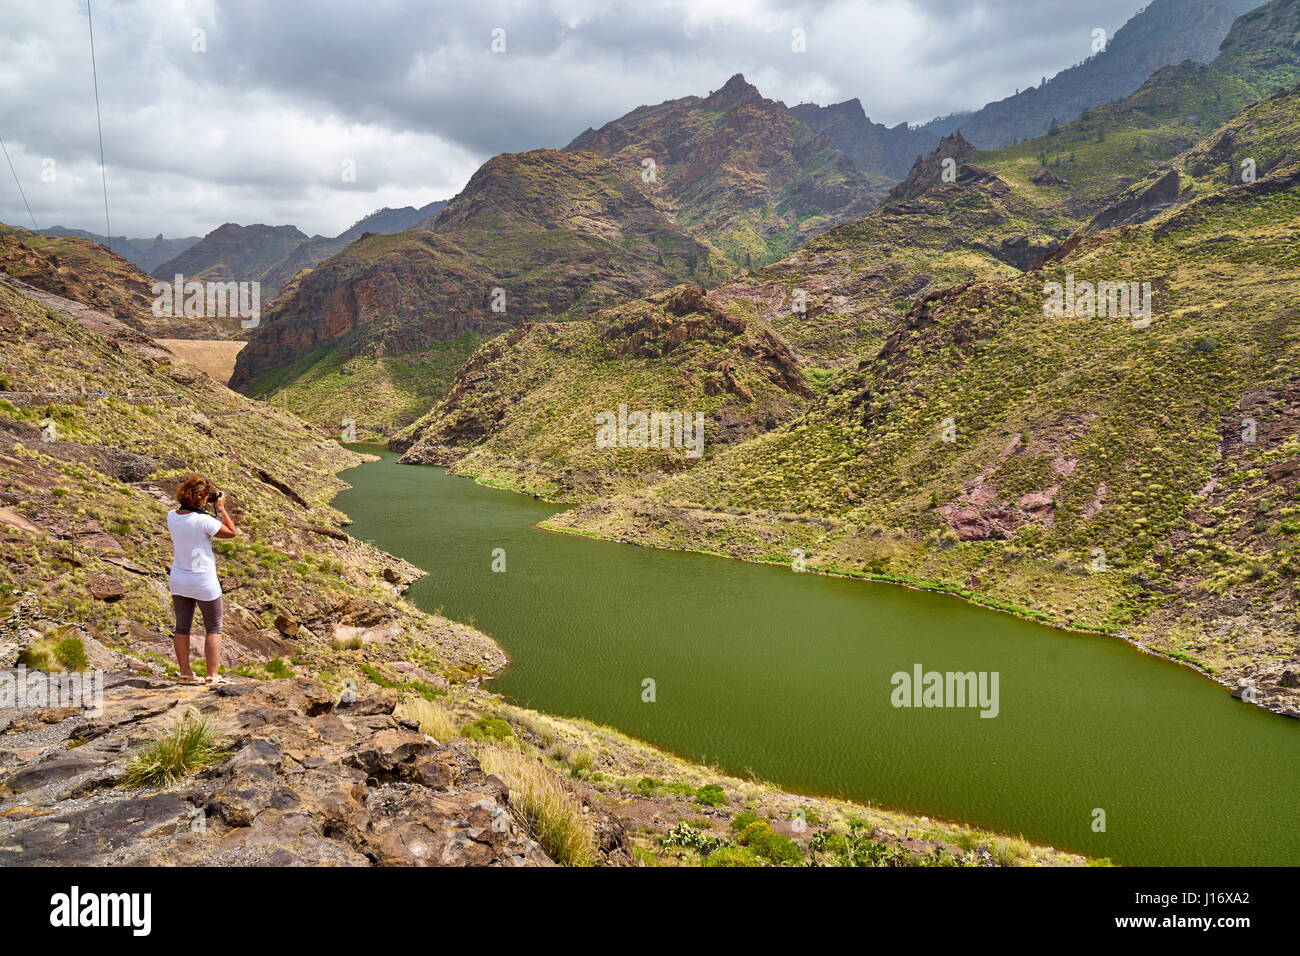 Mountain landscape, Gran Canaria, Spain Stock Photo